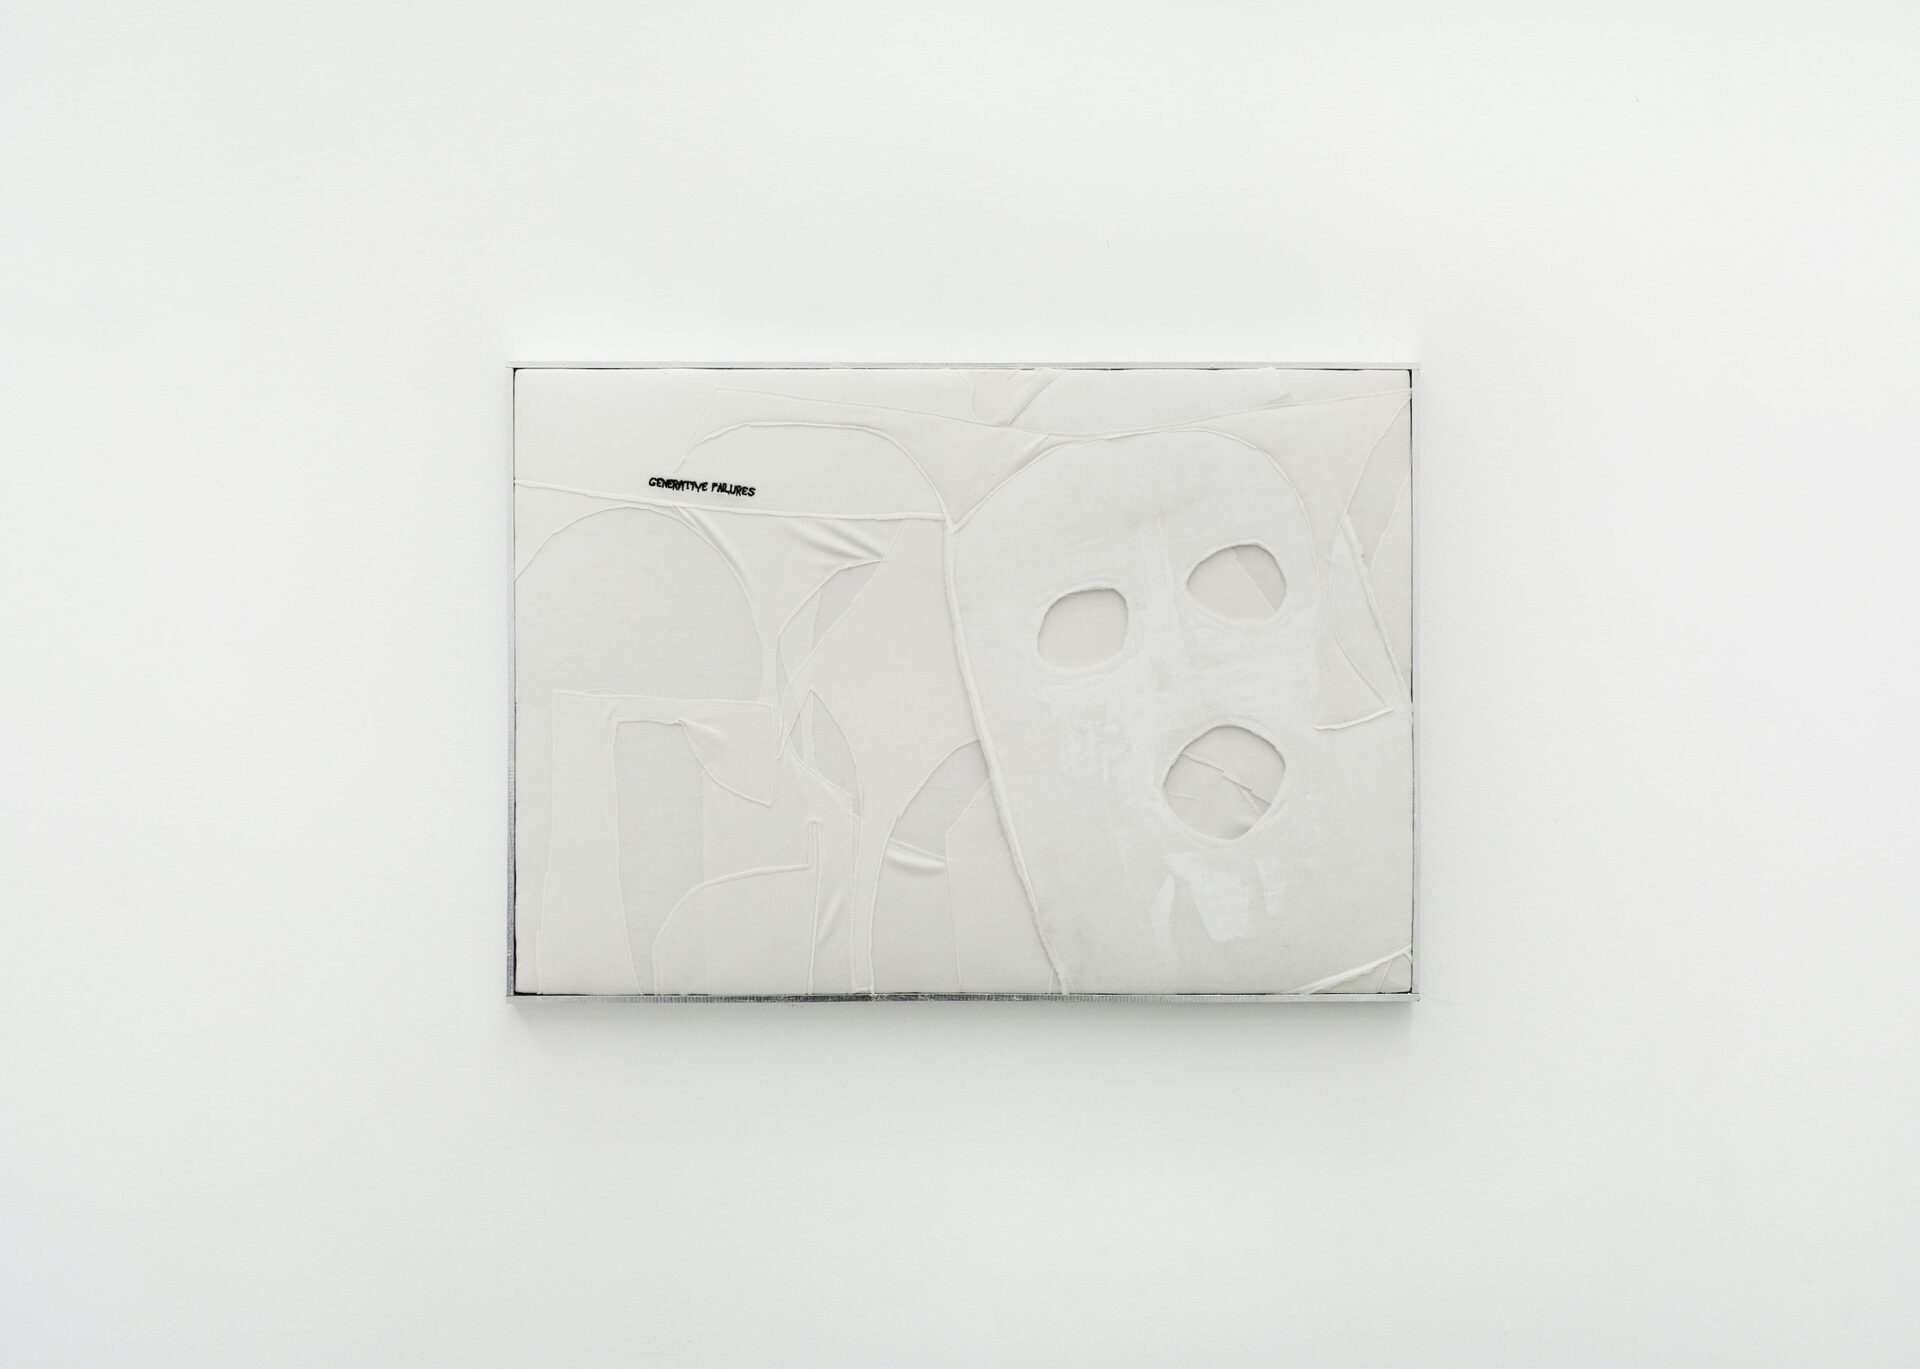 Franca Scholz, Generative Failures, padded embroidery, acrylic on cotton, lyrca, 4 x 61 cm, 2021